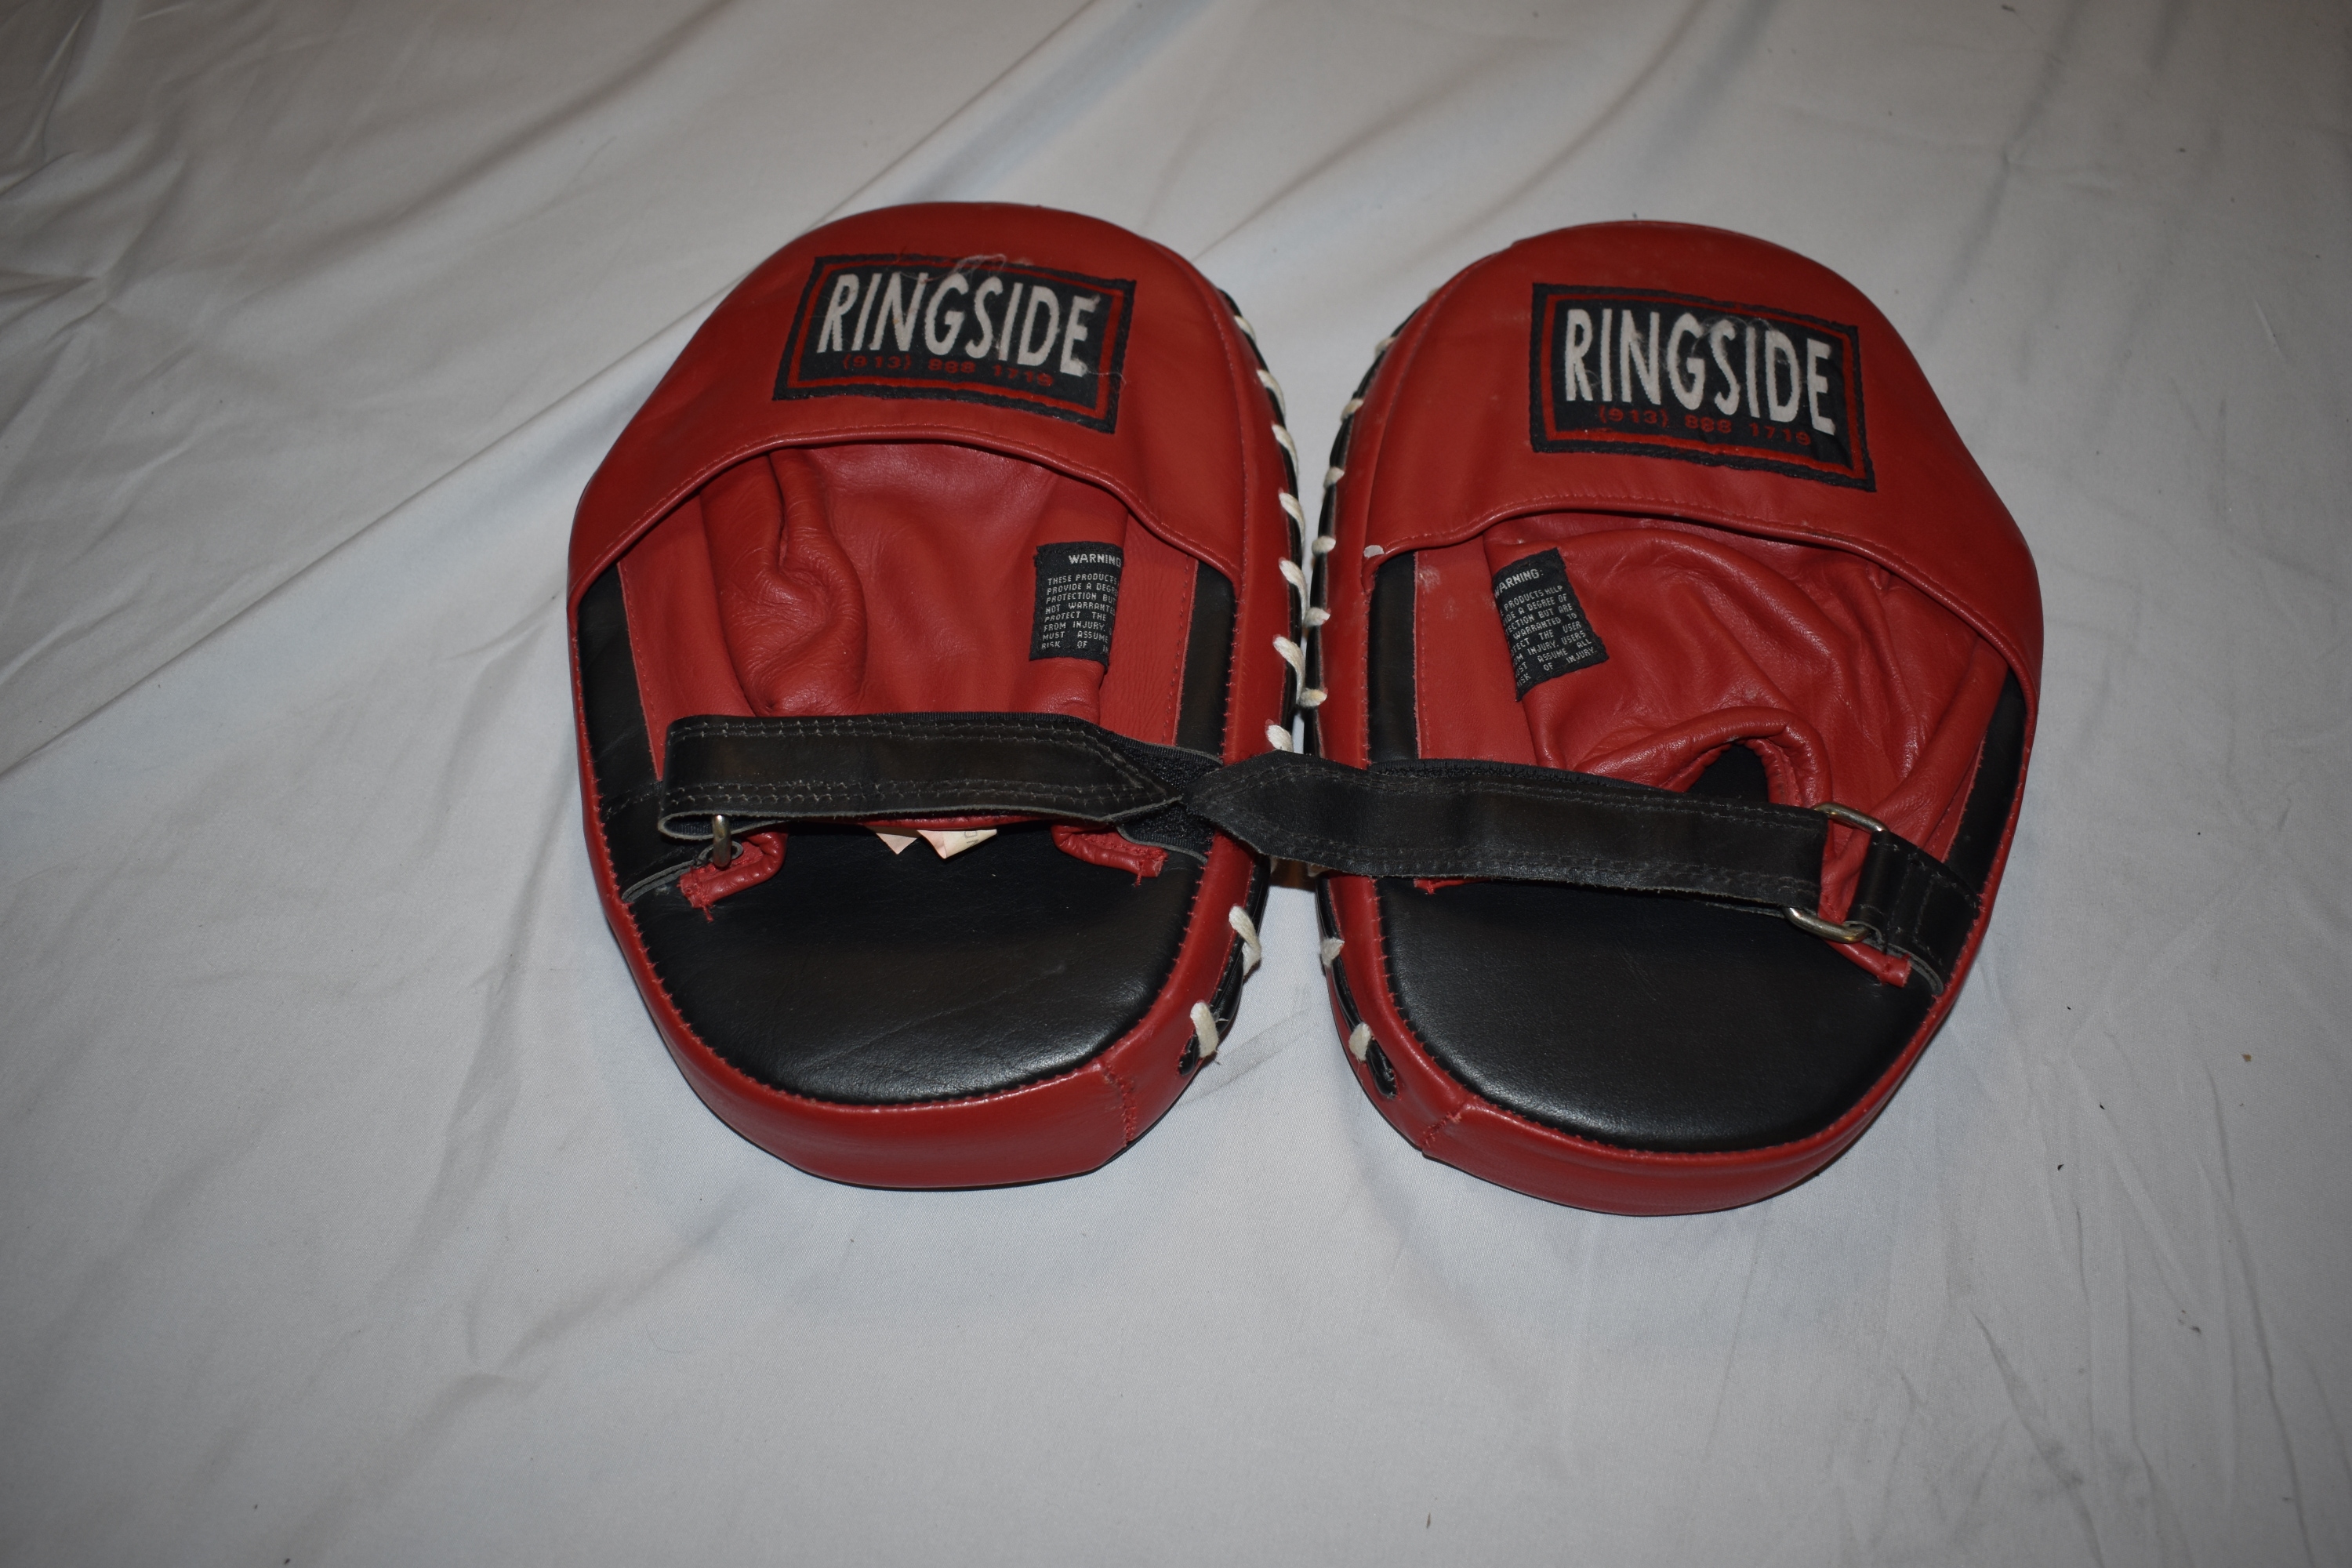 Ringside Boxing/MMA/Training Hand Targets / Strike Pads, Black/Red